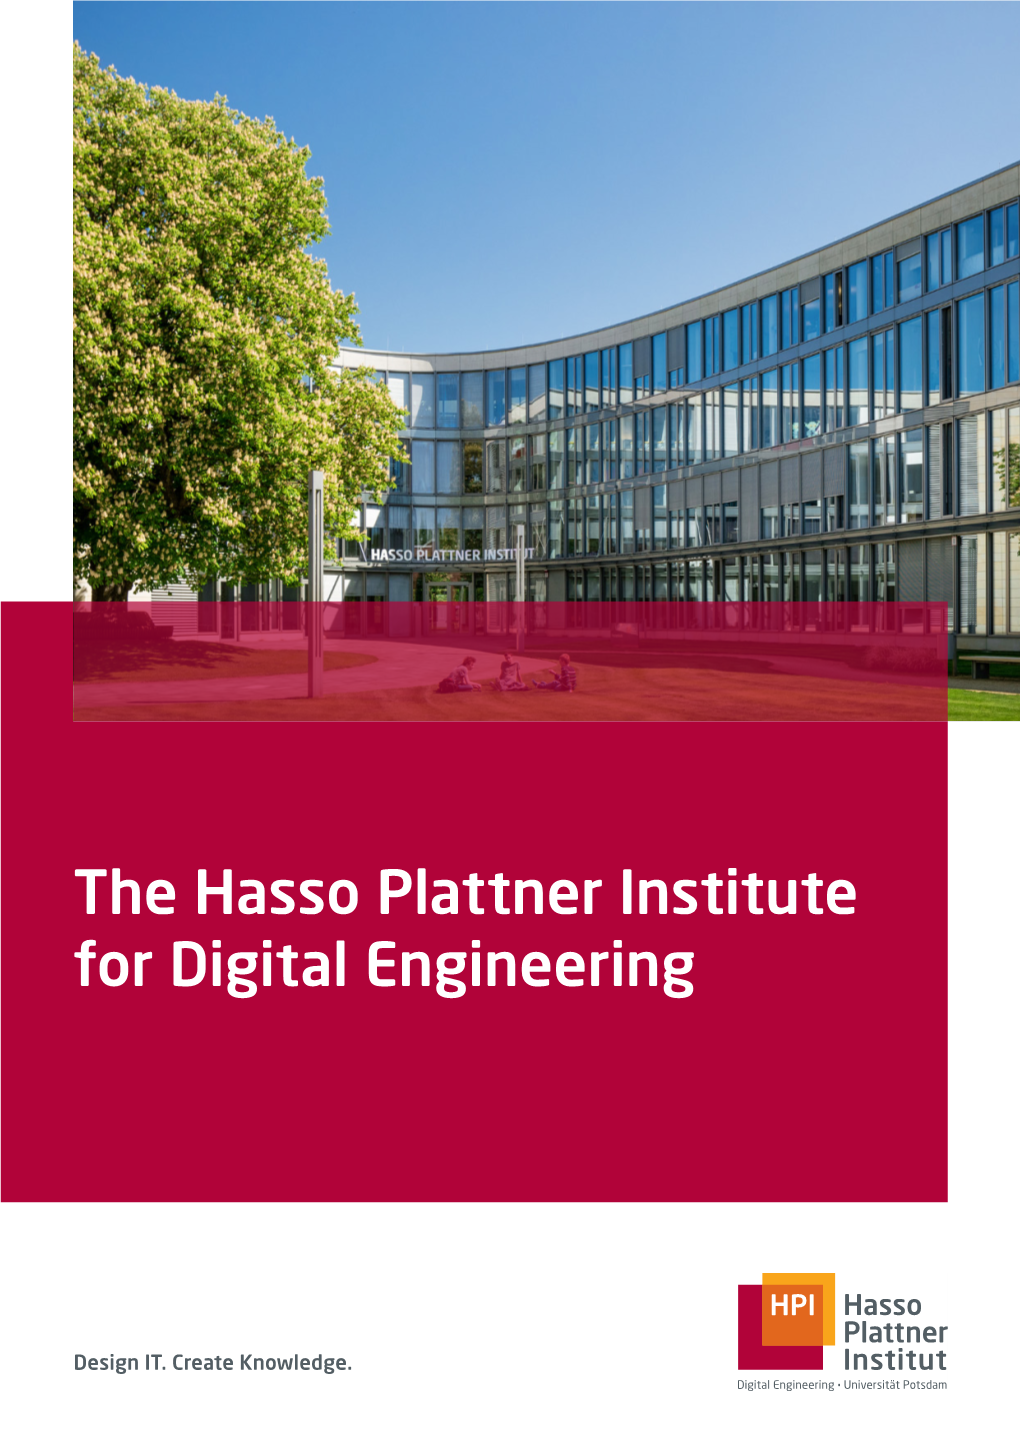 The Hasso Plattner Institute for Digital Engineering